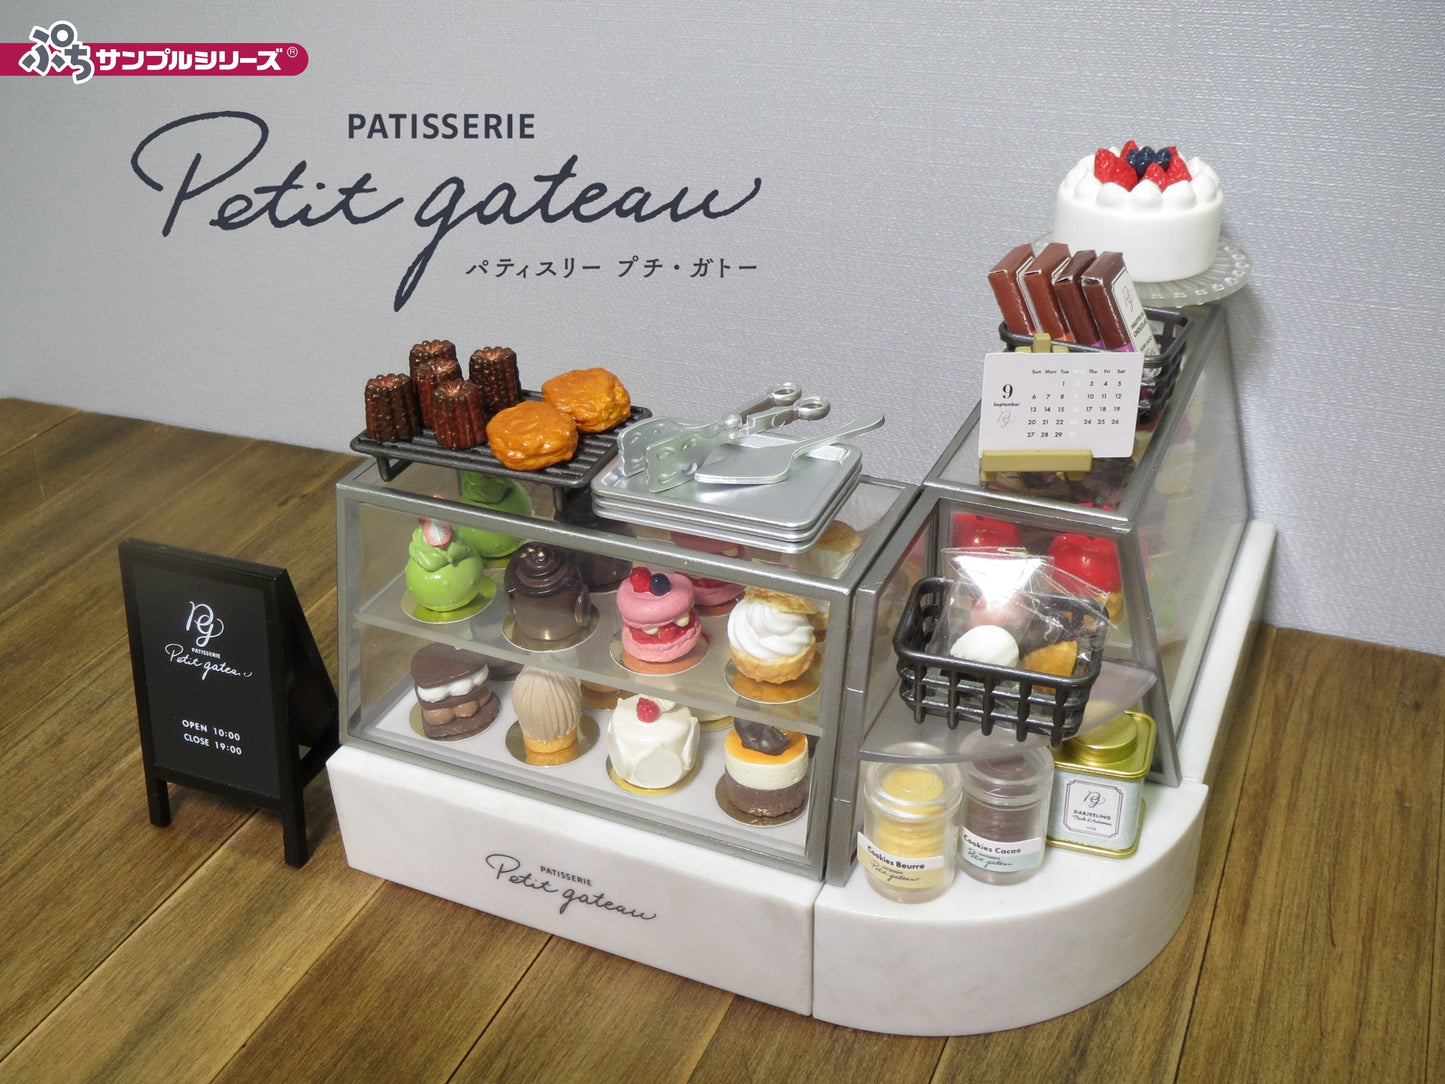 Re-ment Miniature Patisserie Petit Gateau Cake Shop Birthday Cake -  No.4